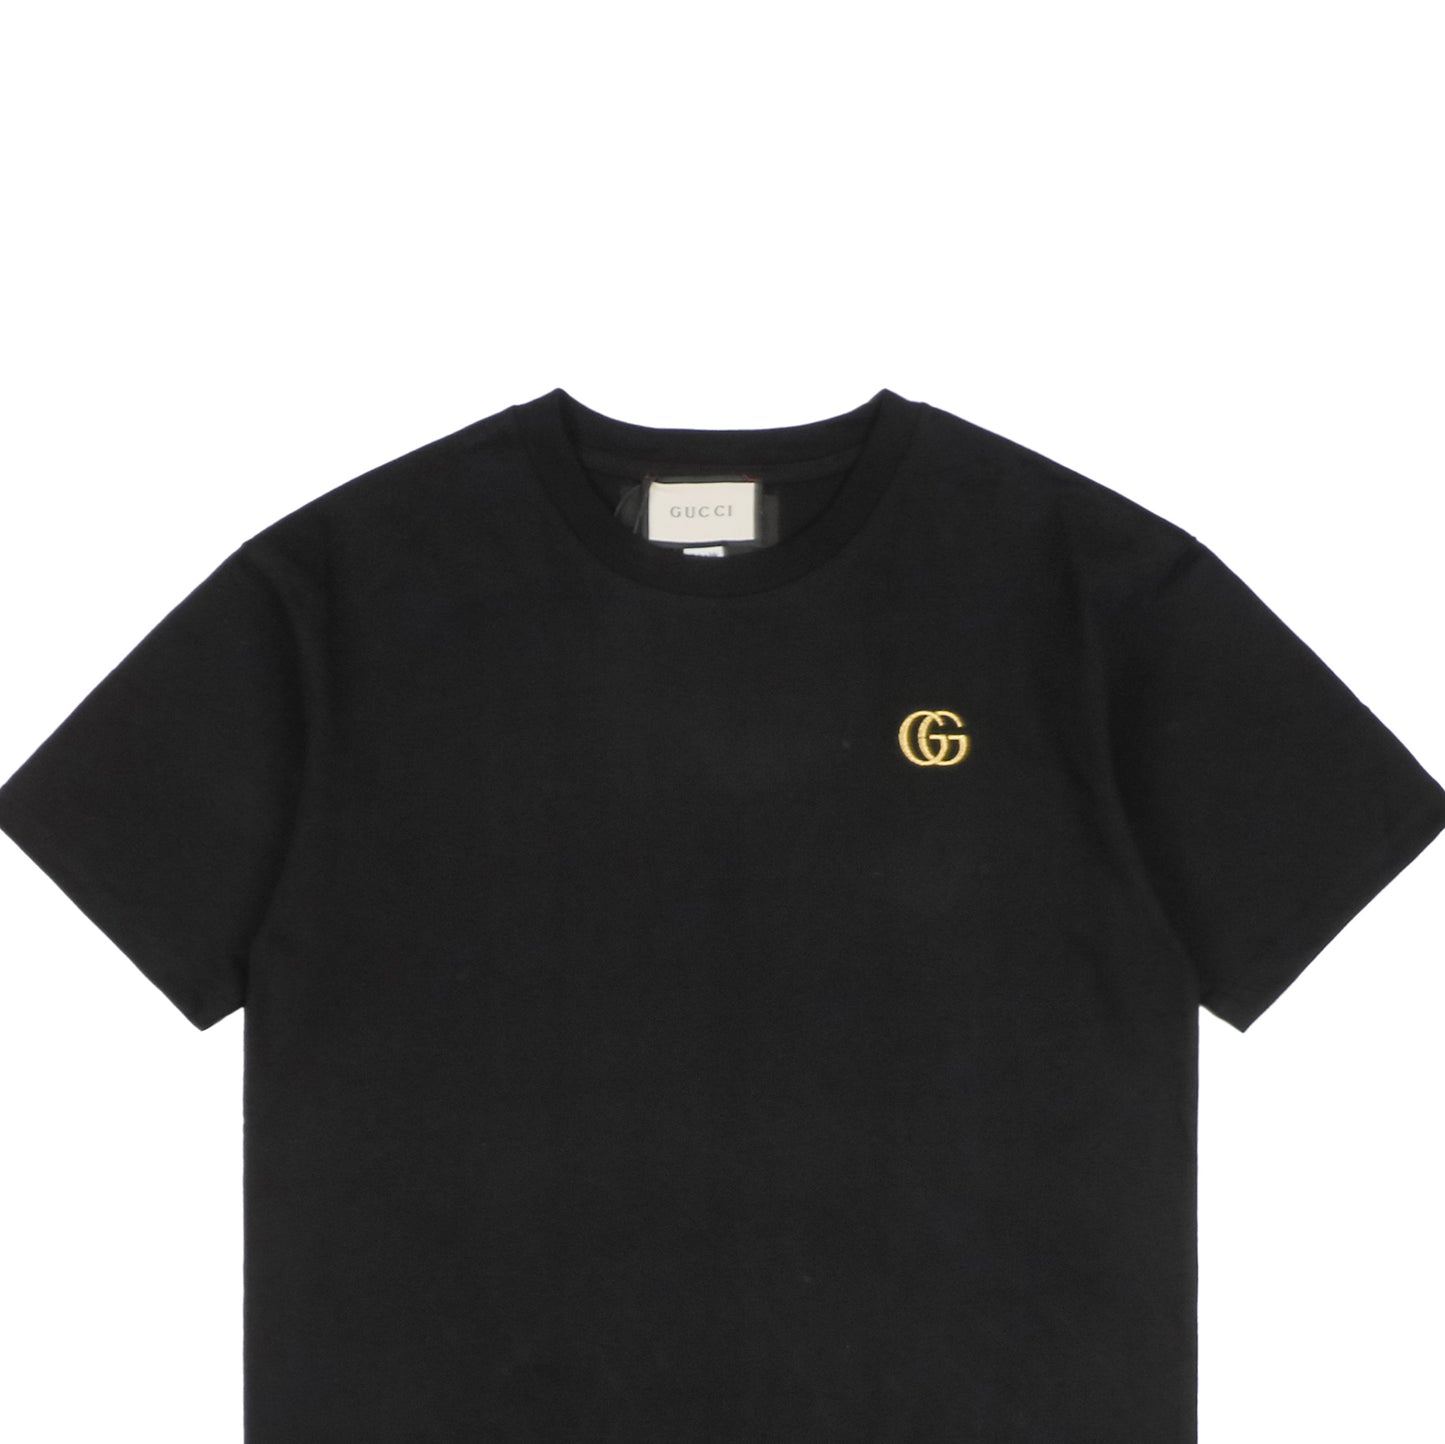 Gucc1 Small Gold T-Shirt Navy